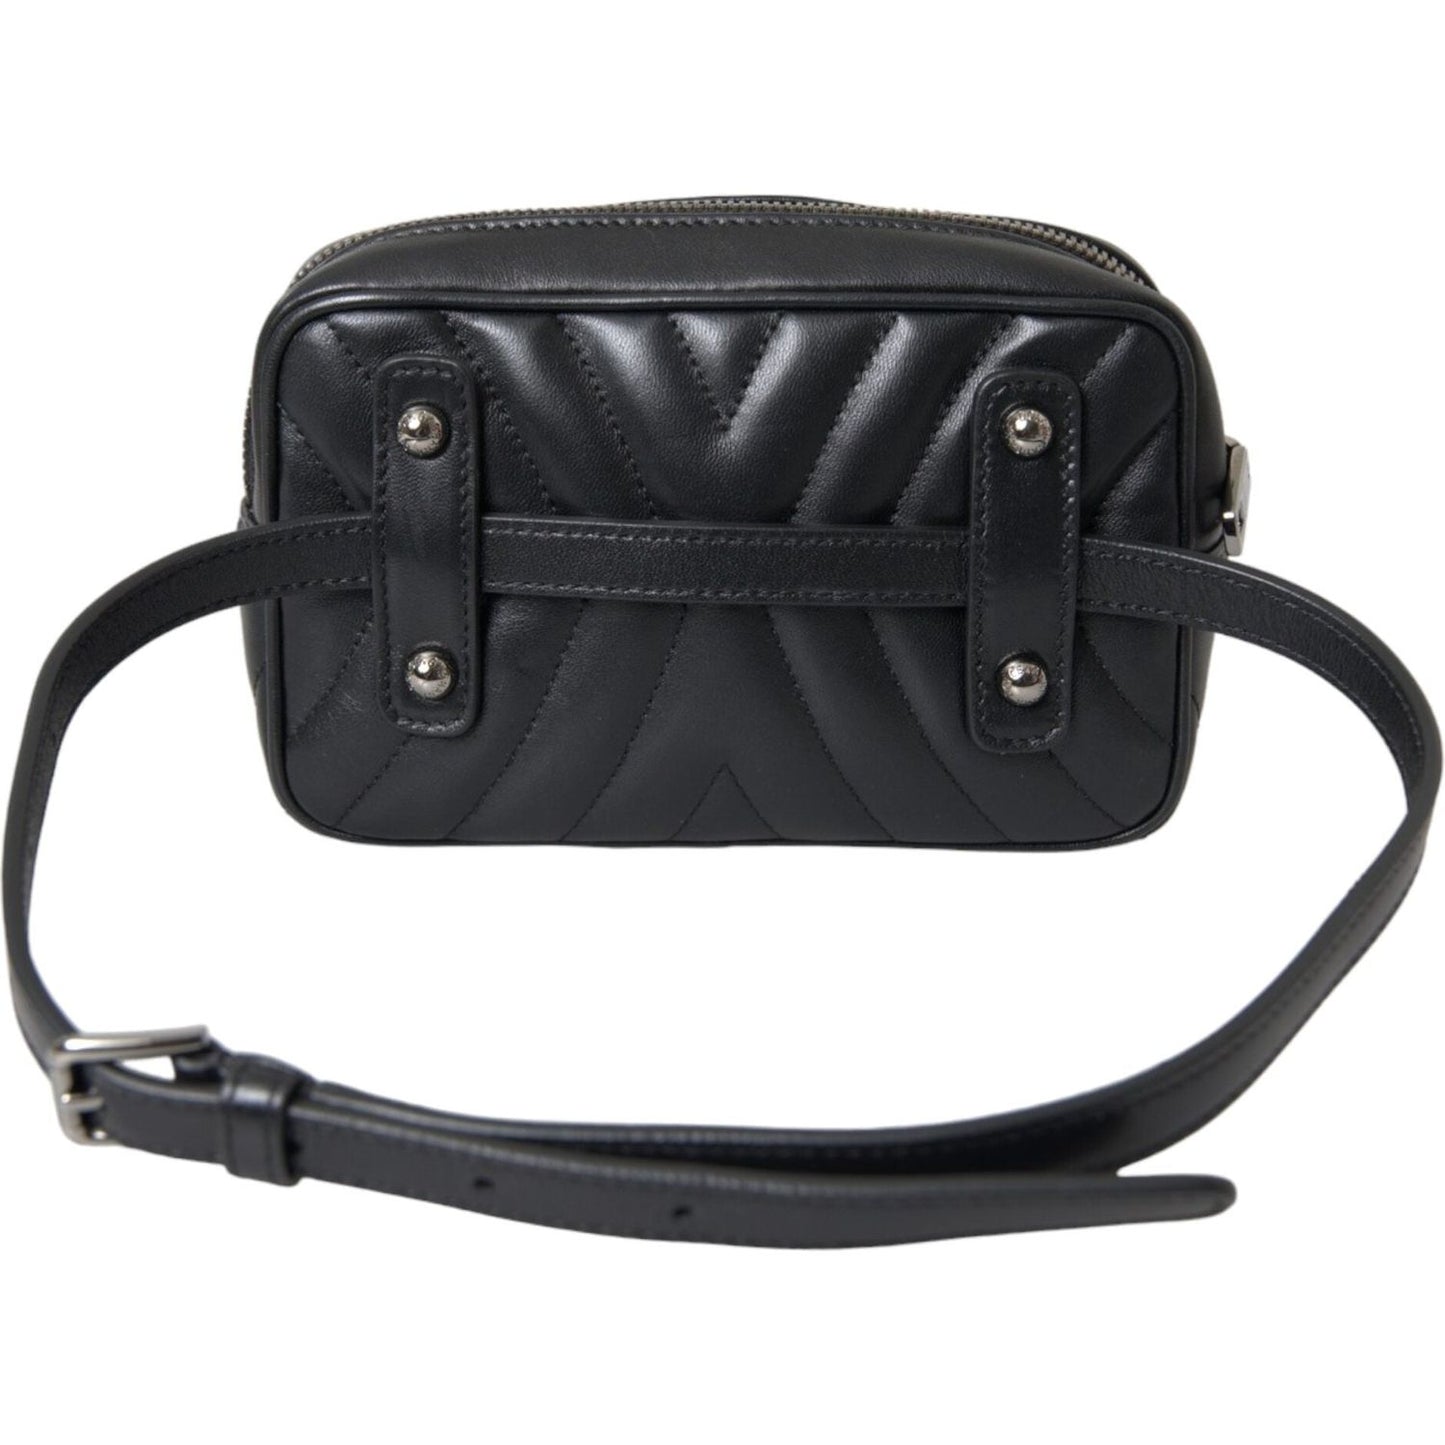 Black Leather Marsupio Quilting Love Belt Fanny Pack Bag